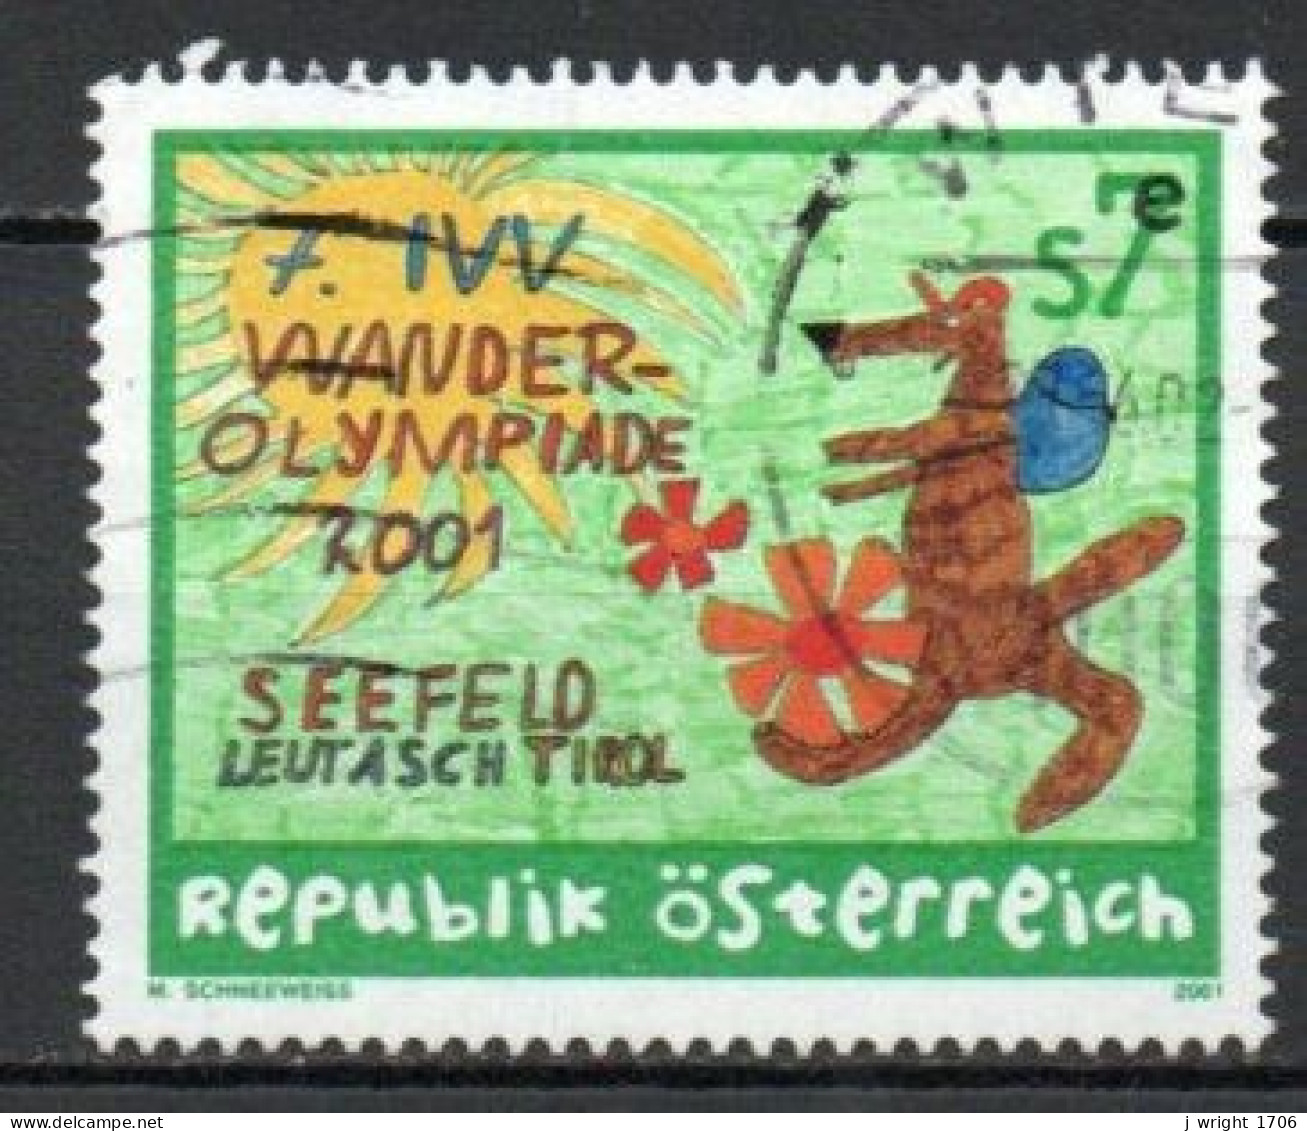 Austria, 2001, Hiking Olympics, 7s, USED - Used Stamps